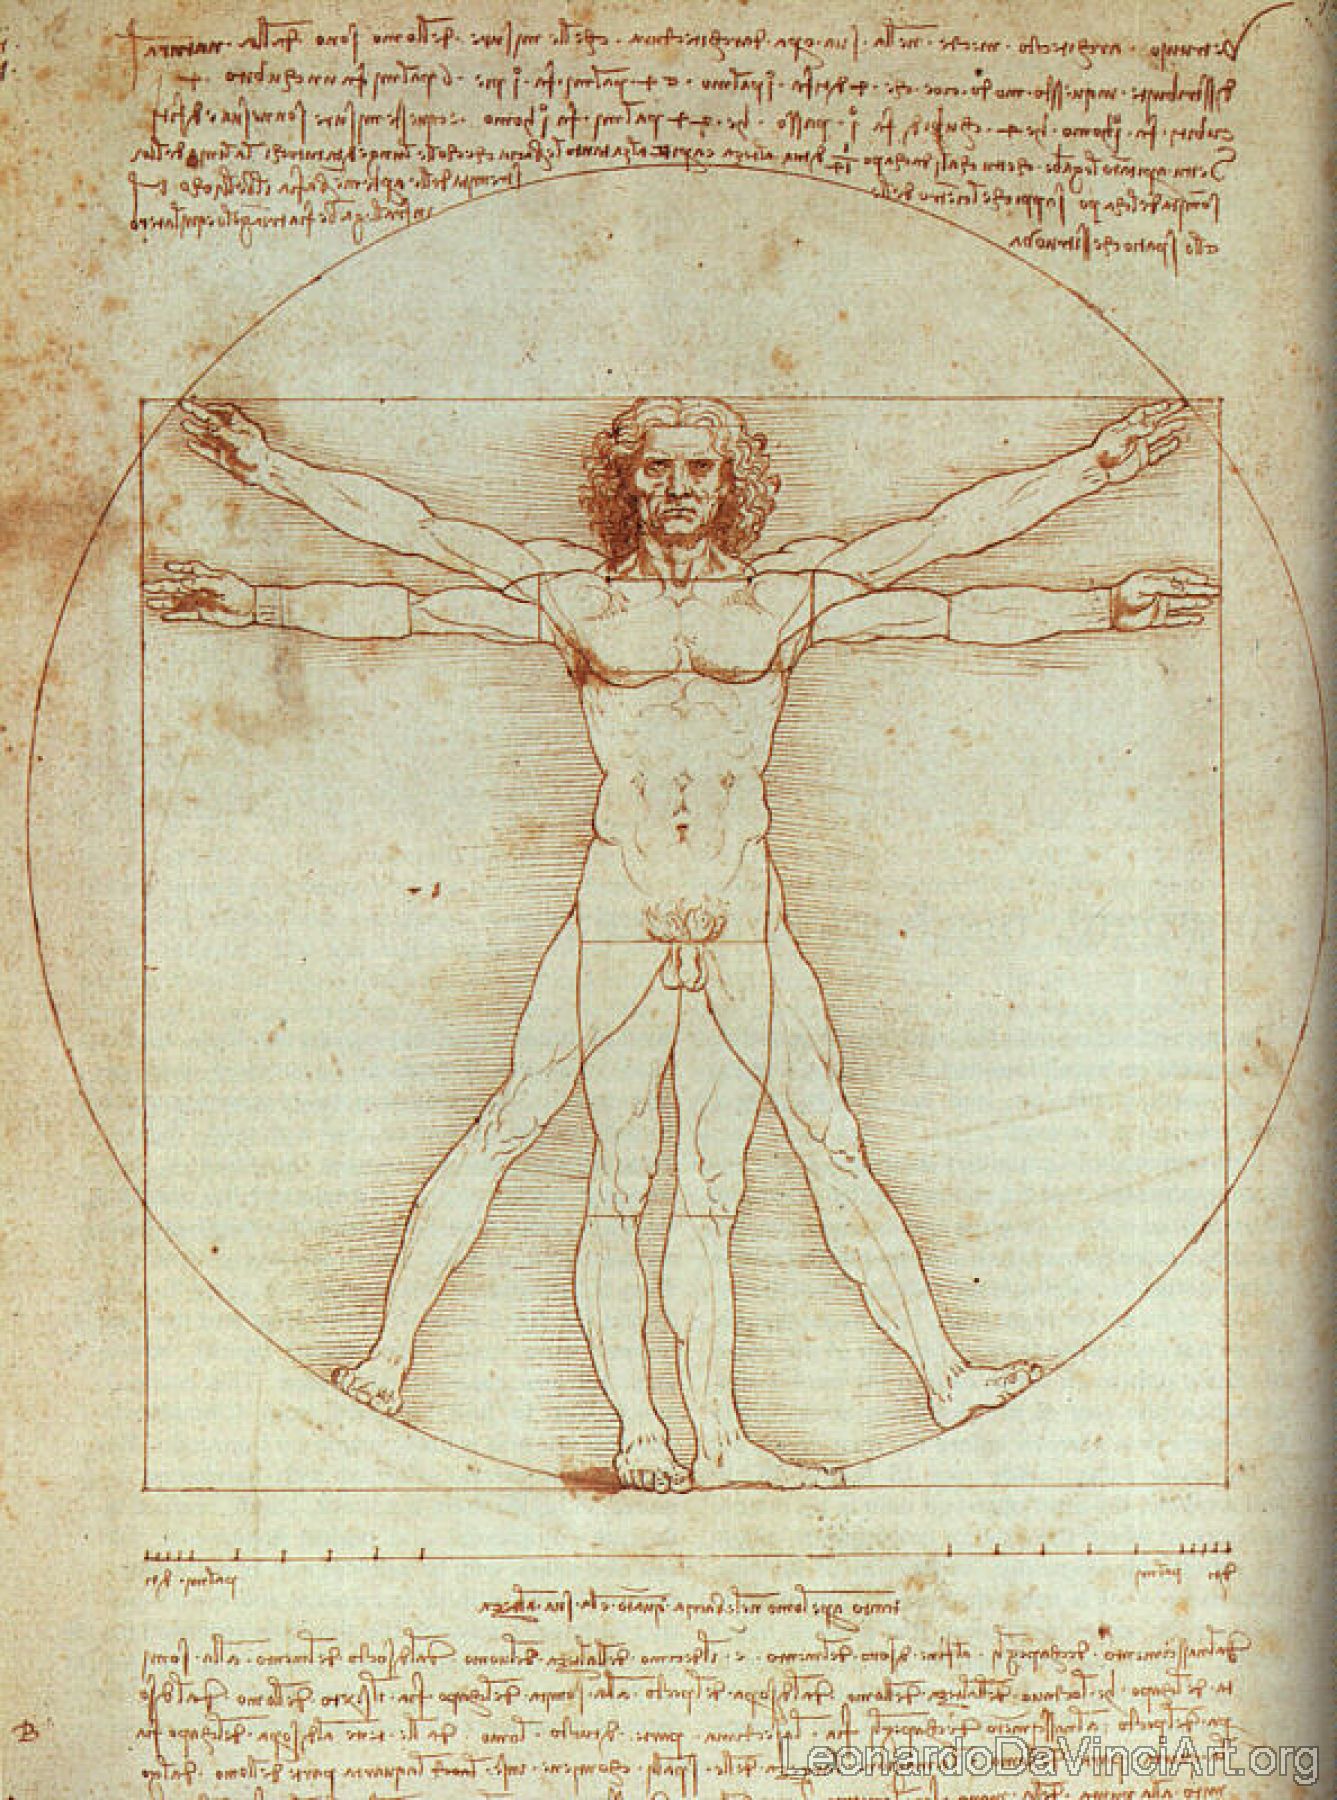 Vitruvian Man, Study of proportions, from Vitruvius's De Architectura